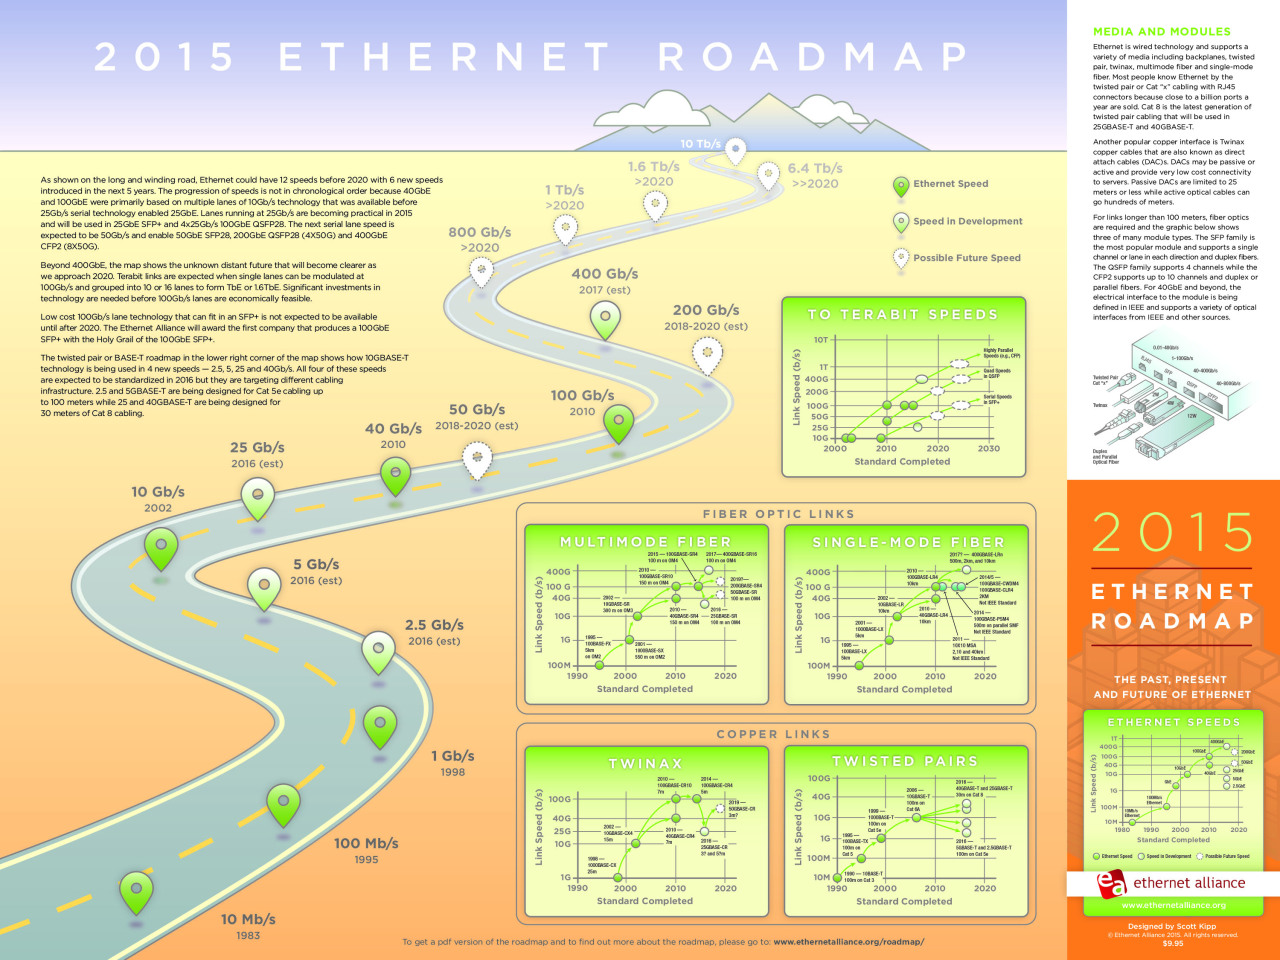 2015 Ethernet Roadmap
braindead:
“ http://www.ethernetalliance.org/wp-content/uploads/2015/03/2015EthernetRoadmap-Side1.jpg [ethernet] roadmap
”